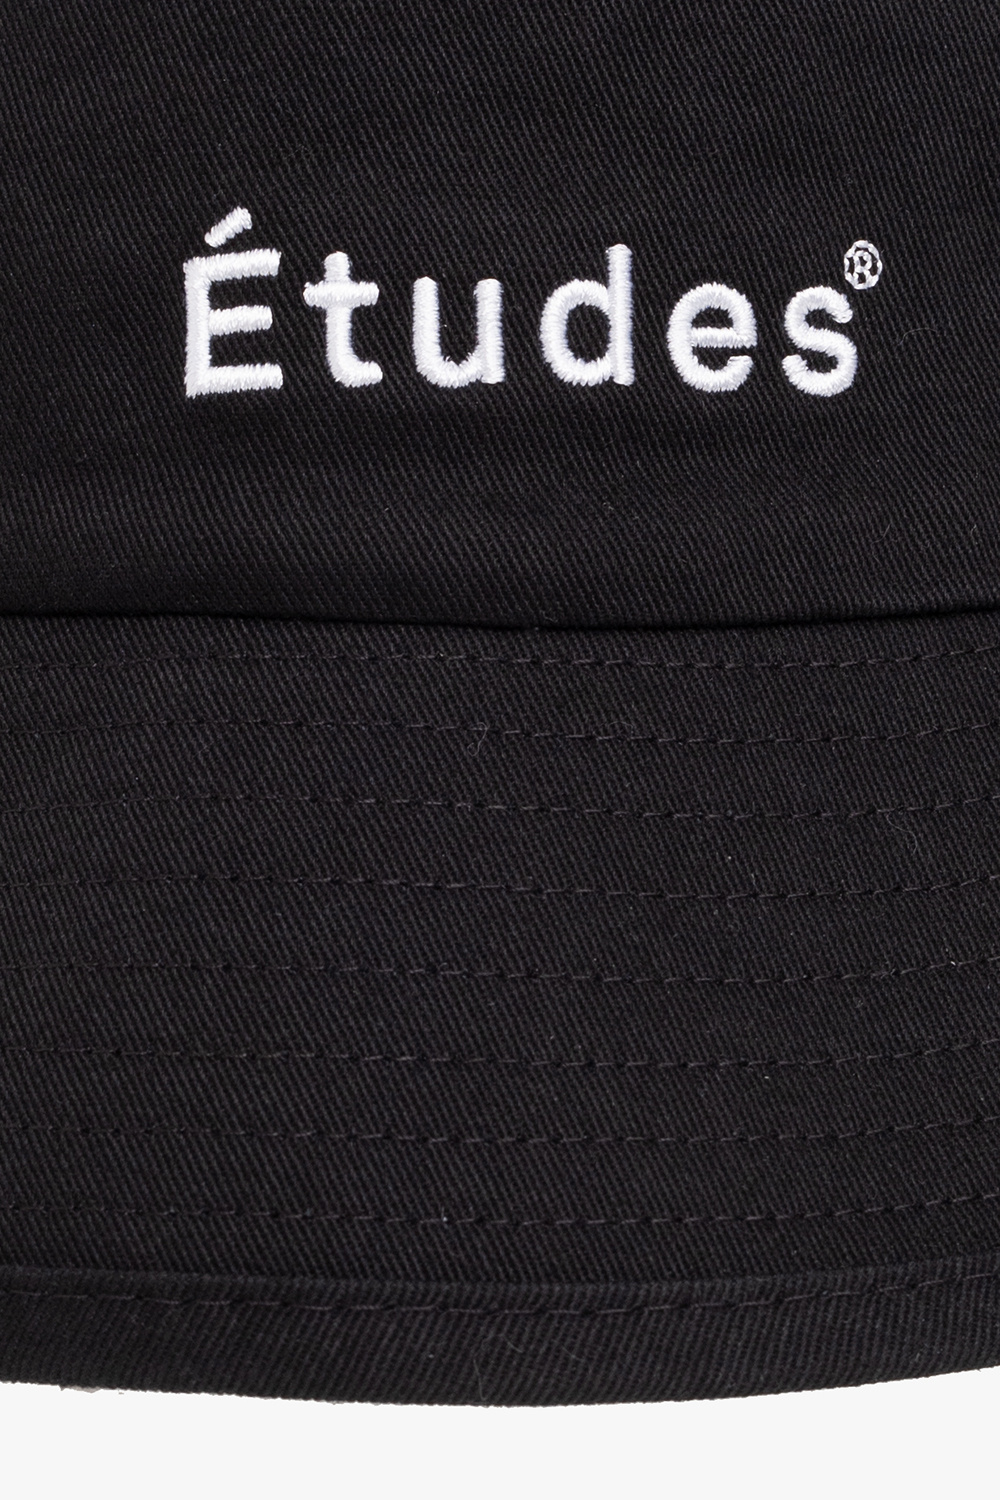 Etudes Bucket Orange hat with logo